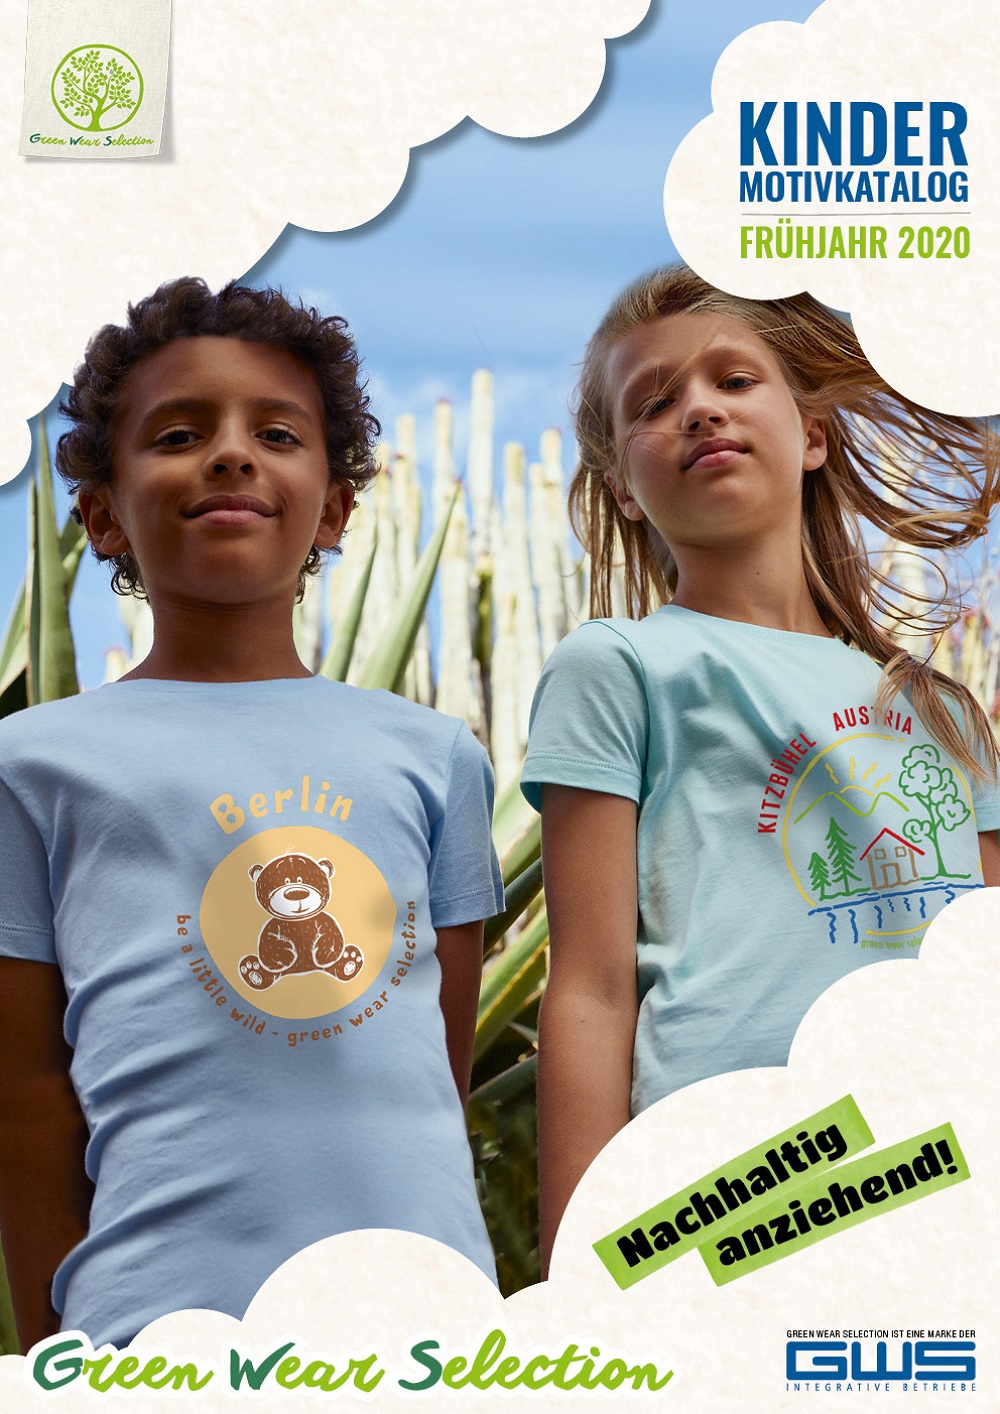 gws green wear kindermotivkatalog 2020 logo